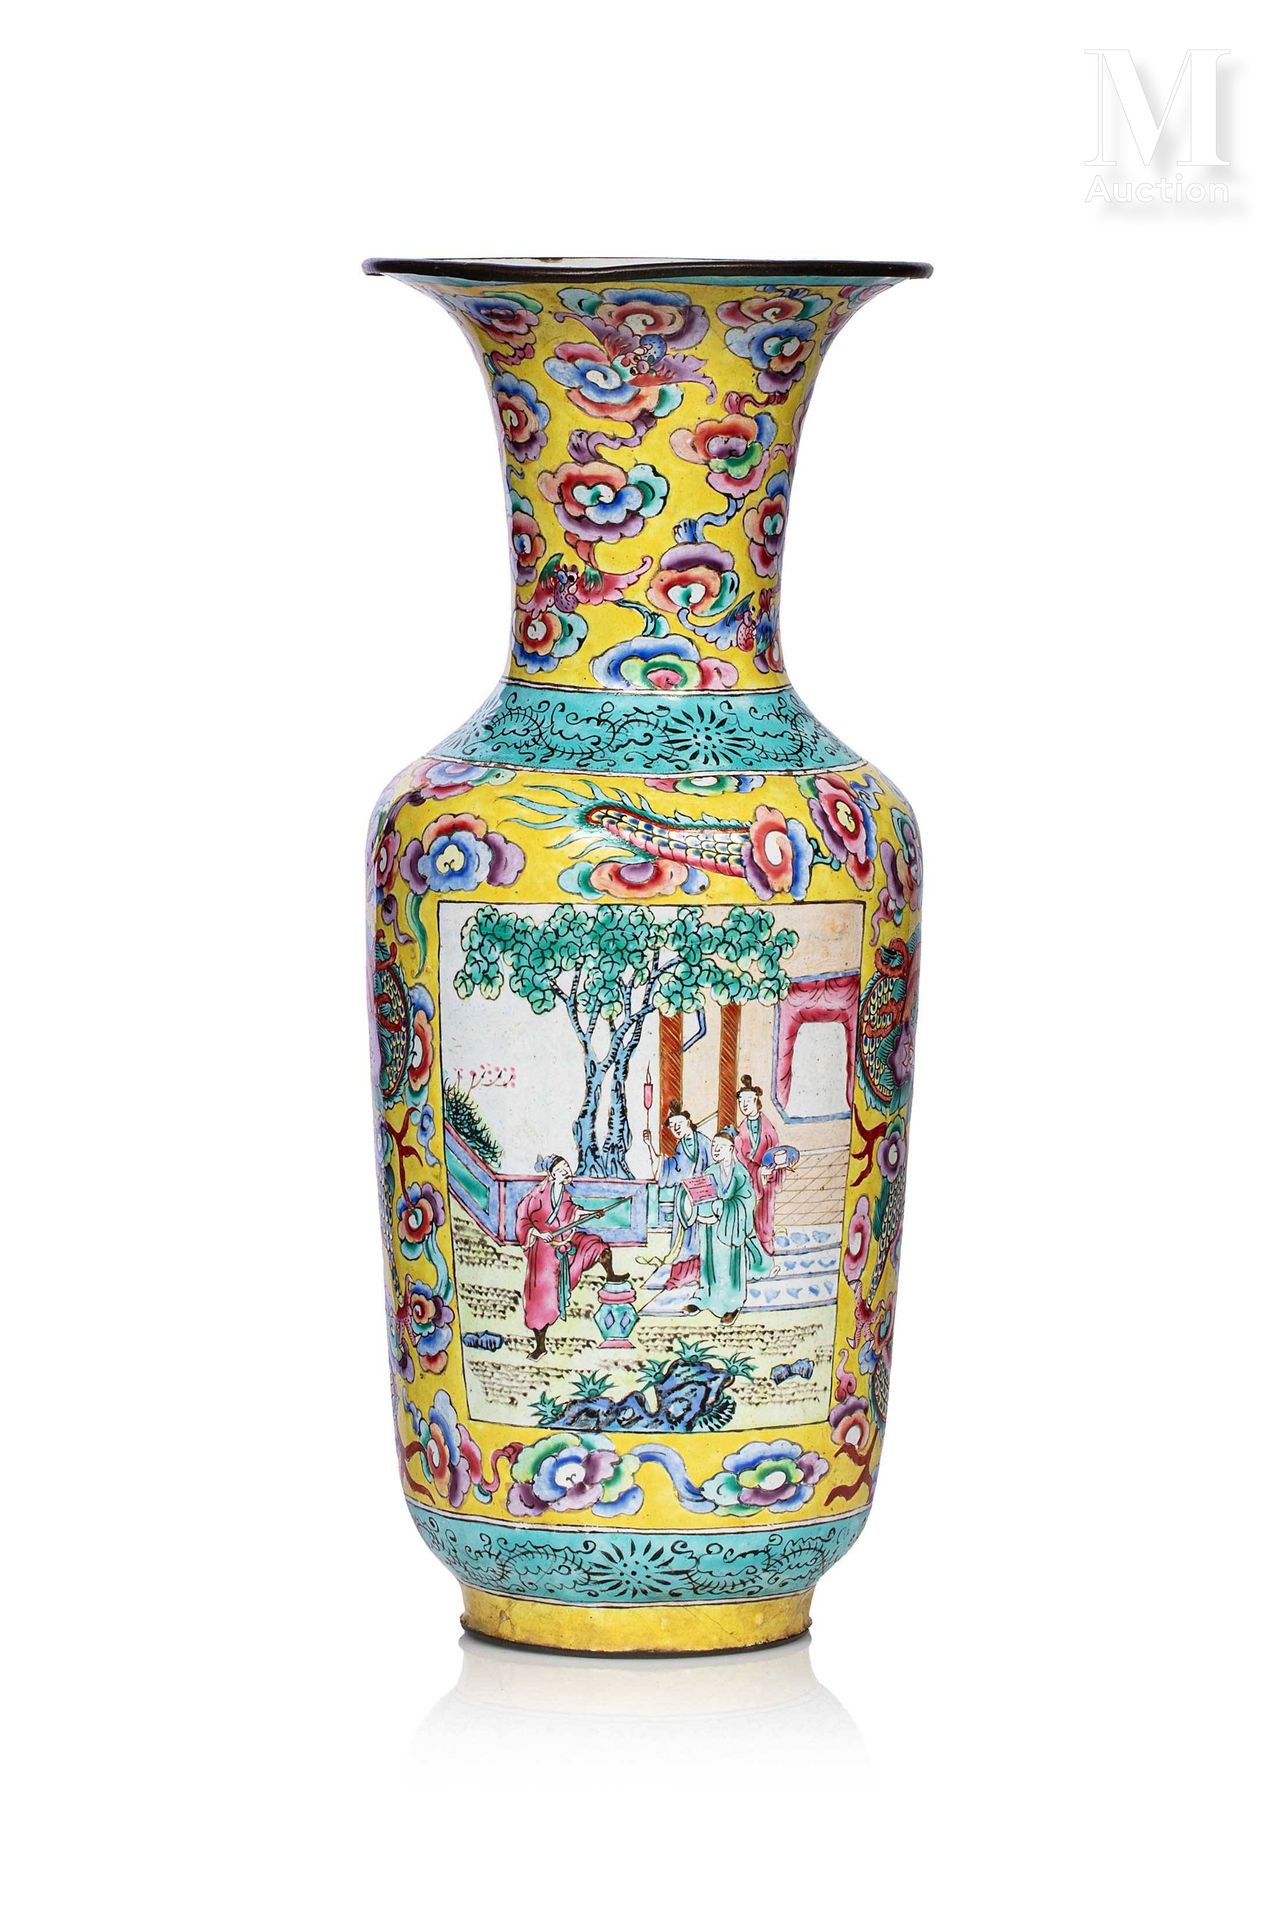 VIETNAM, XIXe siècle, Vase de forme balustre 铜质多色珐琅彩装饰，云龙背景上的刻画人物的场景。

高度：26厘米

&hellip;